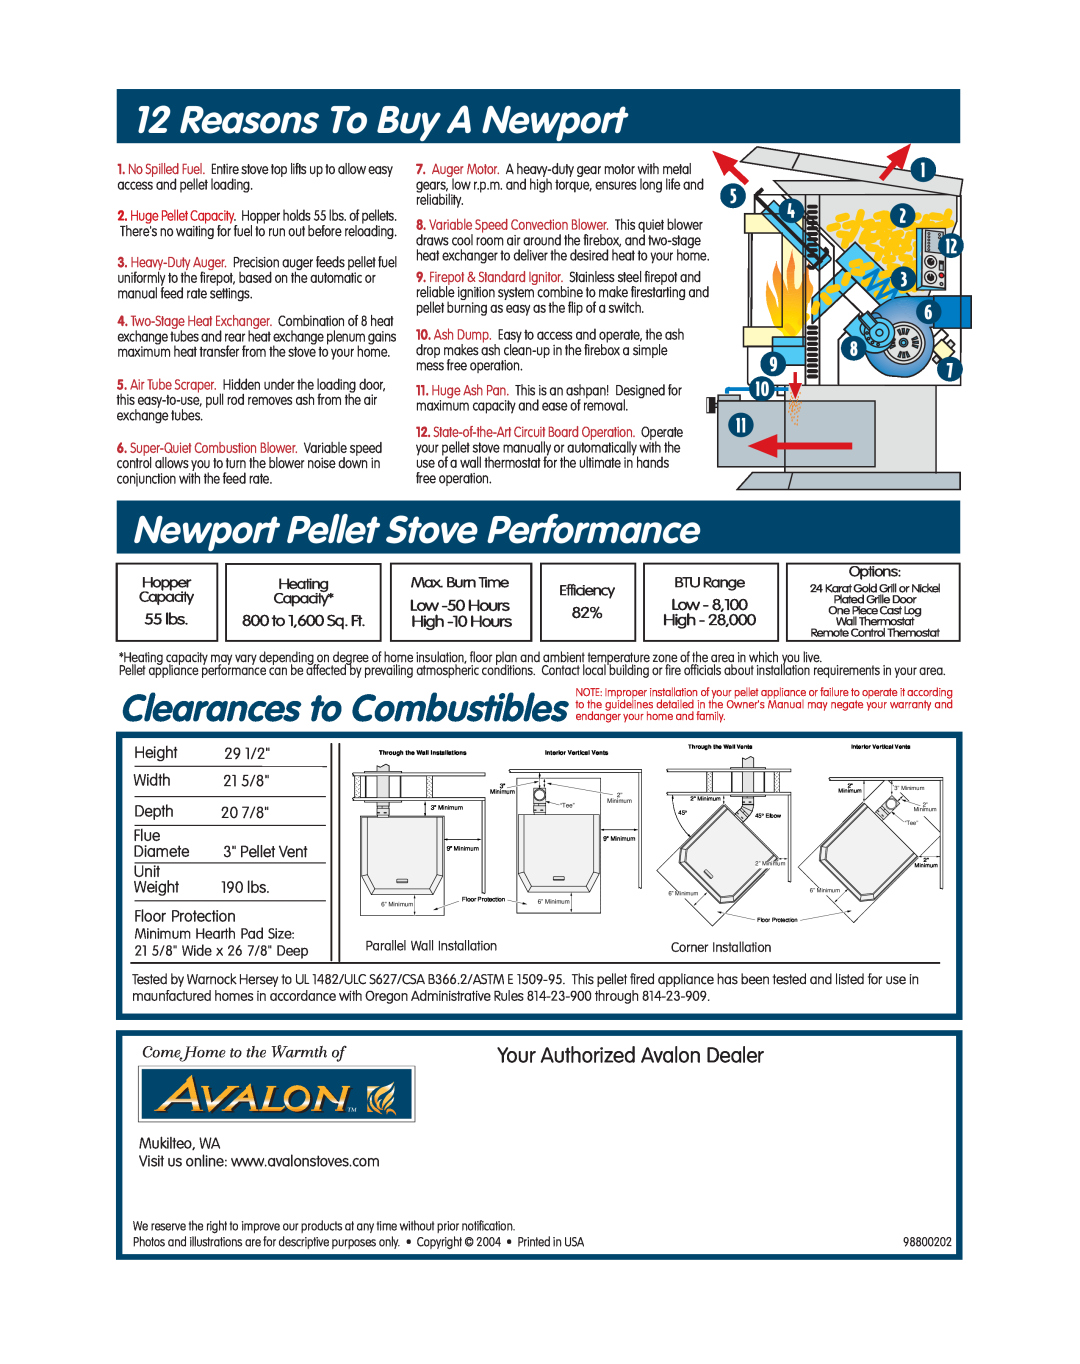 Avalon Stoves Pellet Burning Stove manual Reasons To Buy A Newport, Newport Pellet Stove Performance 